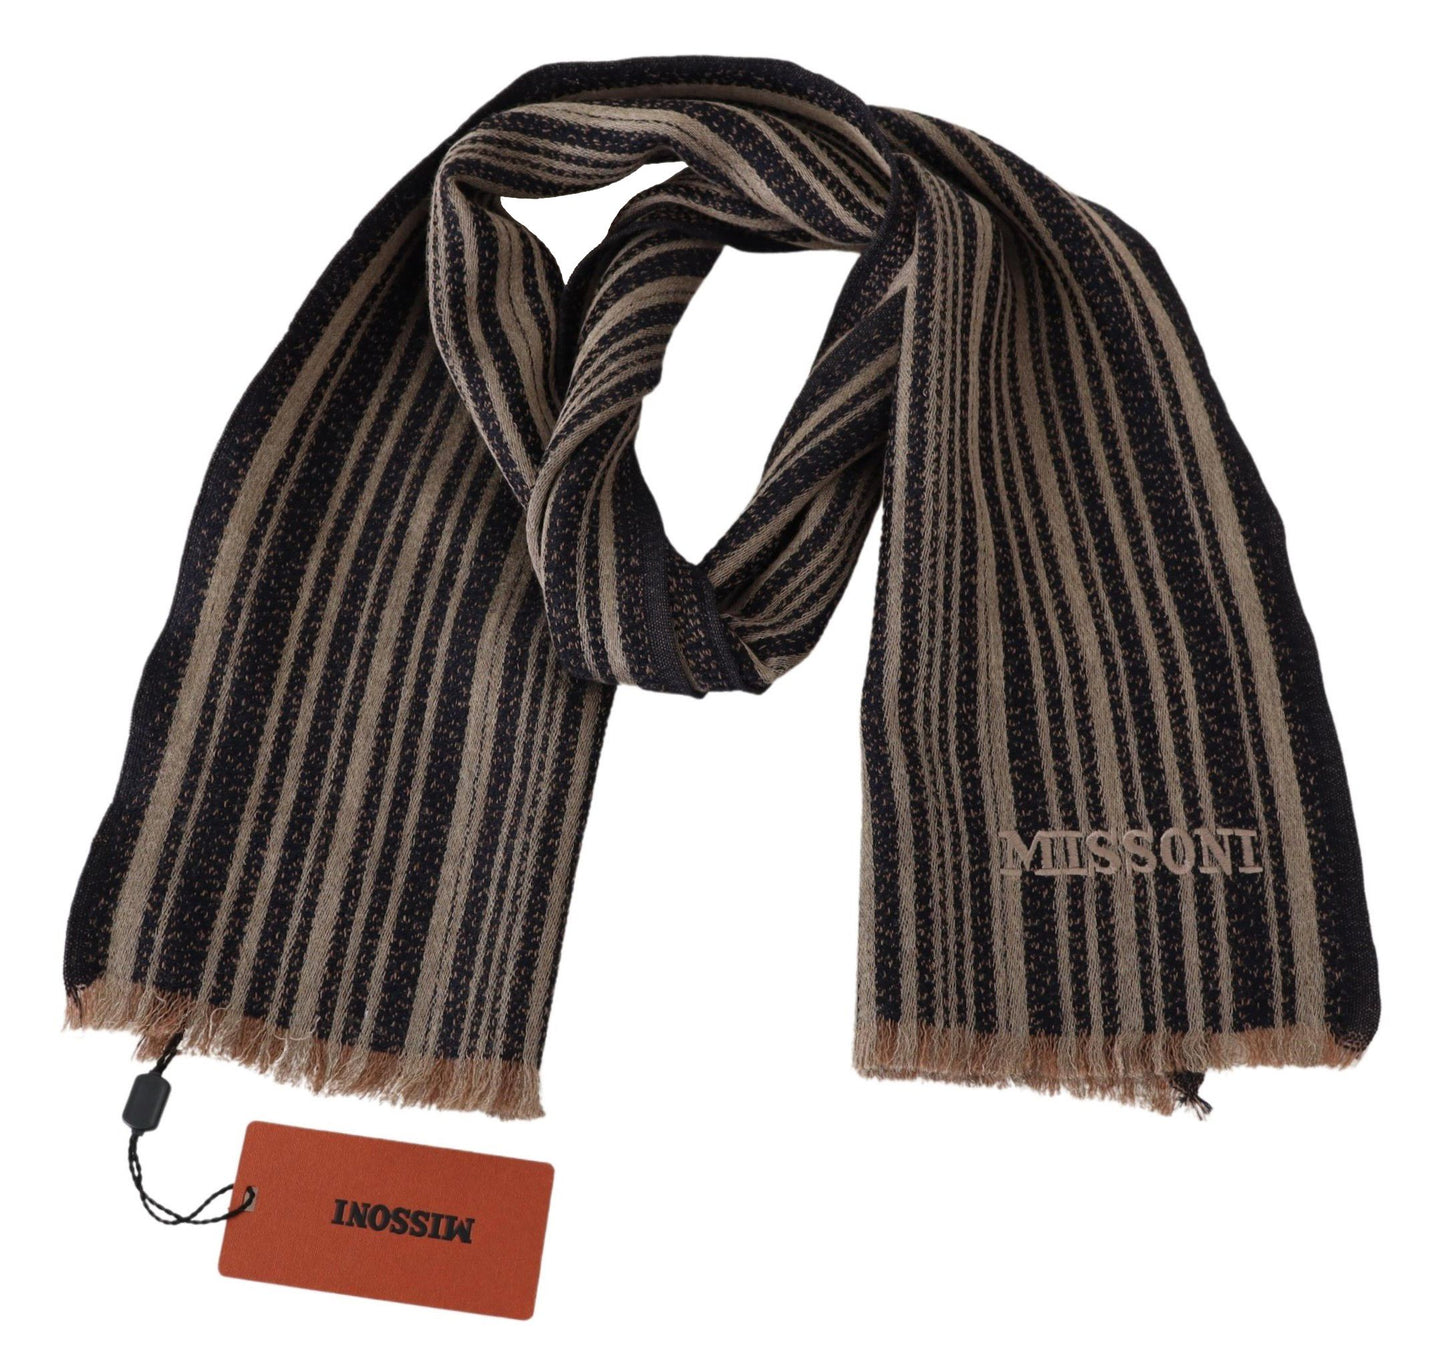 Multicolor Striped Wool Unisex Neck Wrap Shawl Scarf